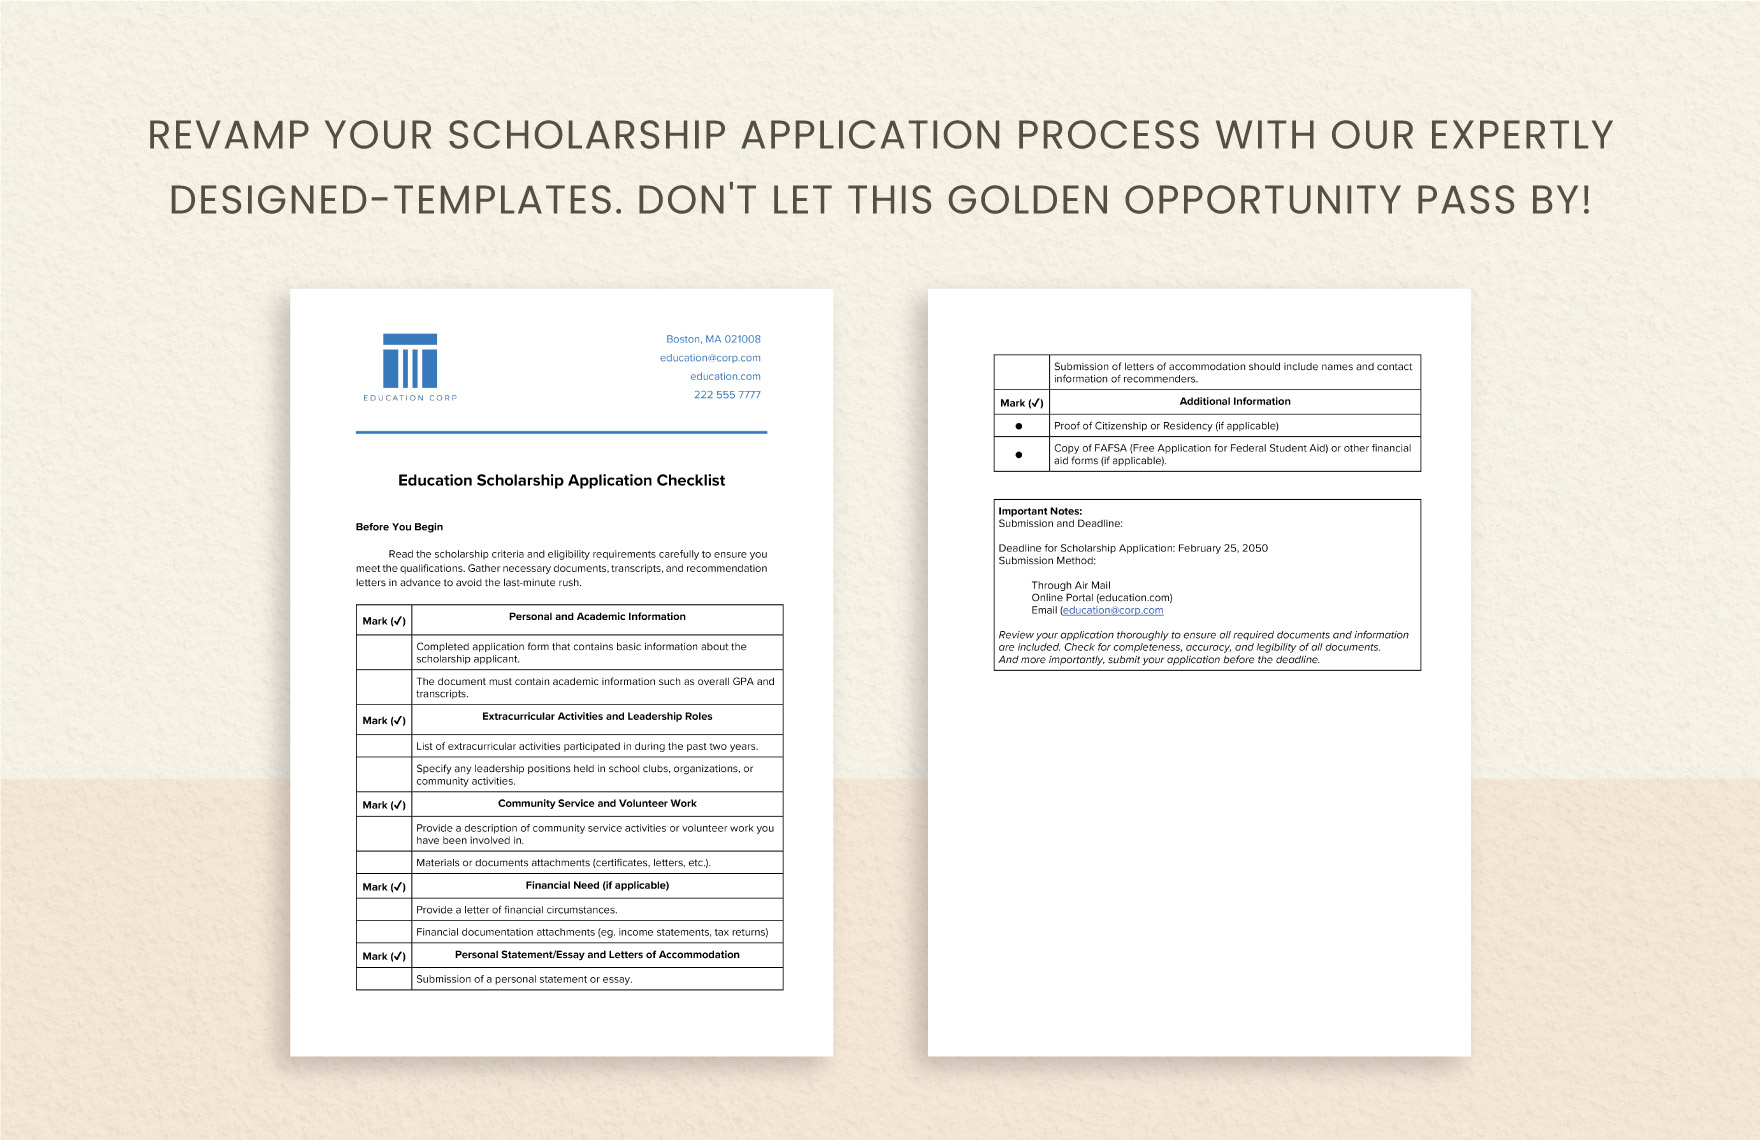 Education Scholarship Application Checklist Template